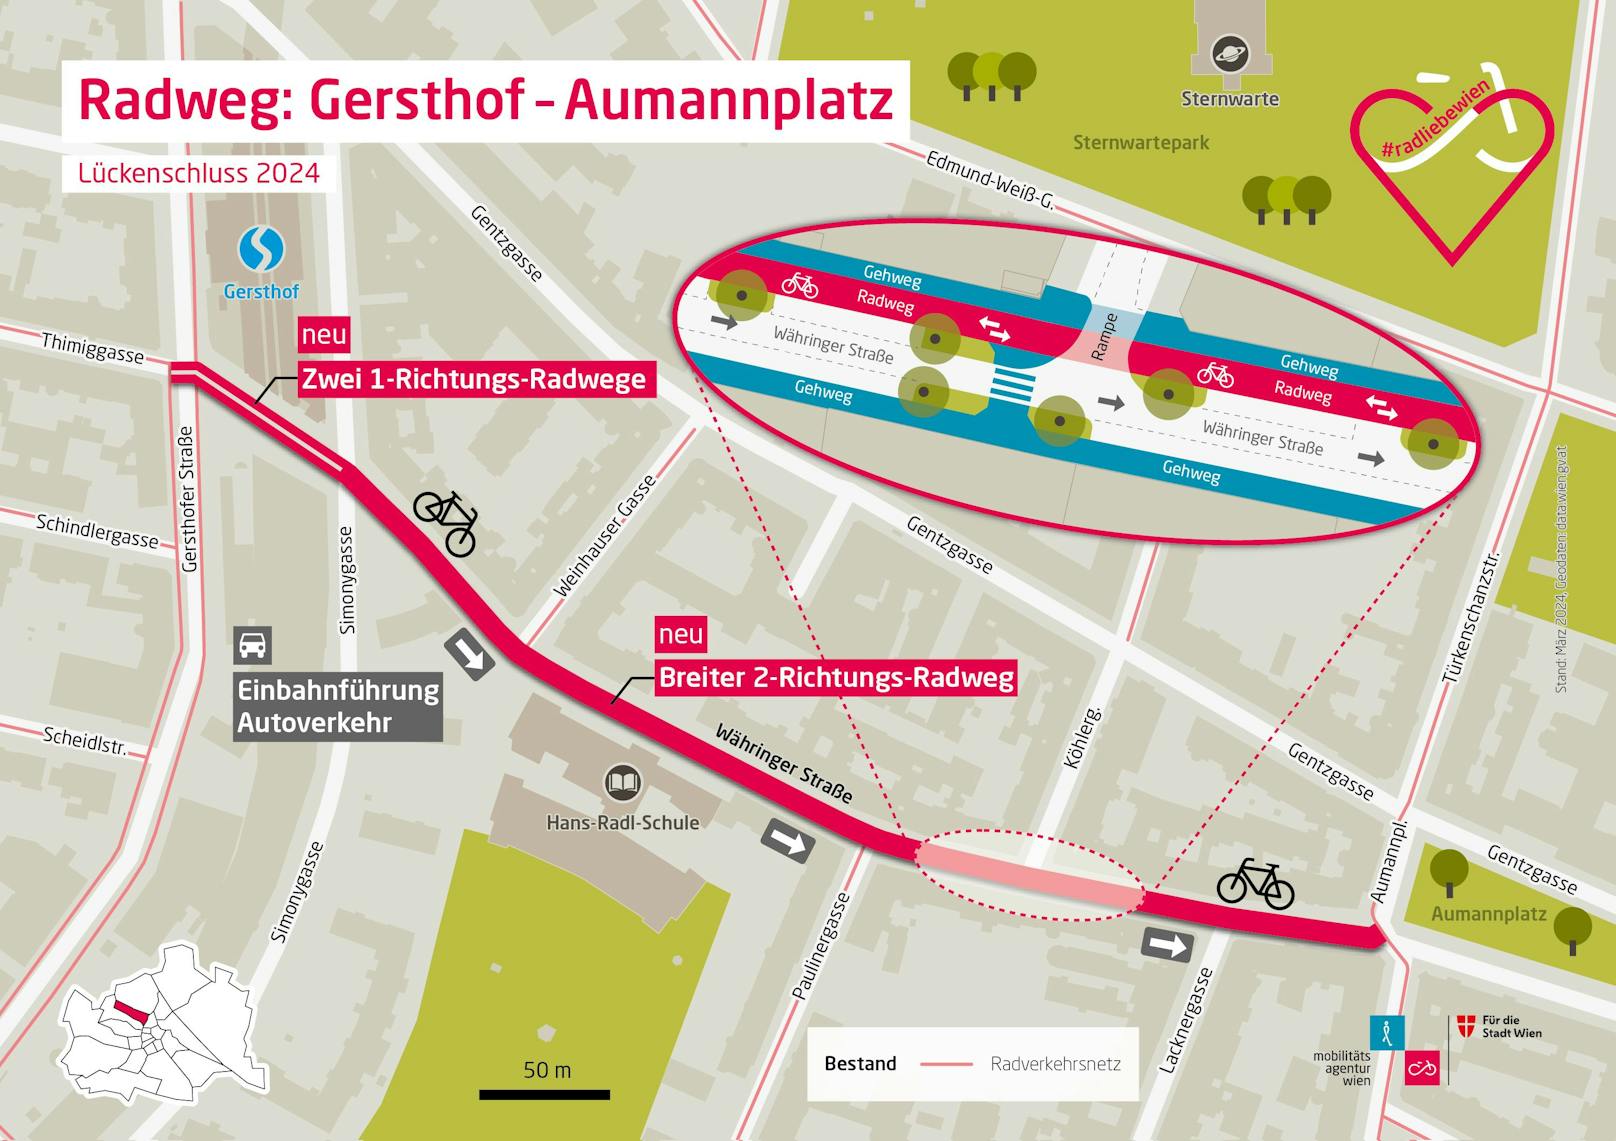 Radweg: Gersthof - Aumannplatz